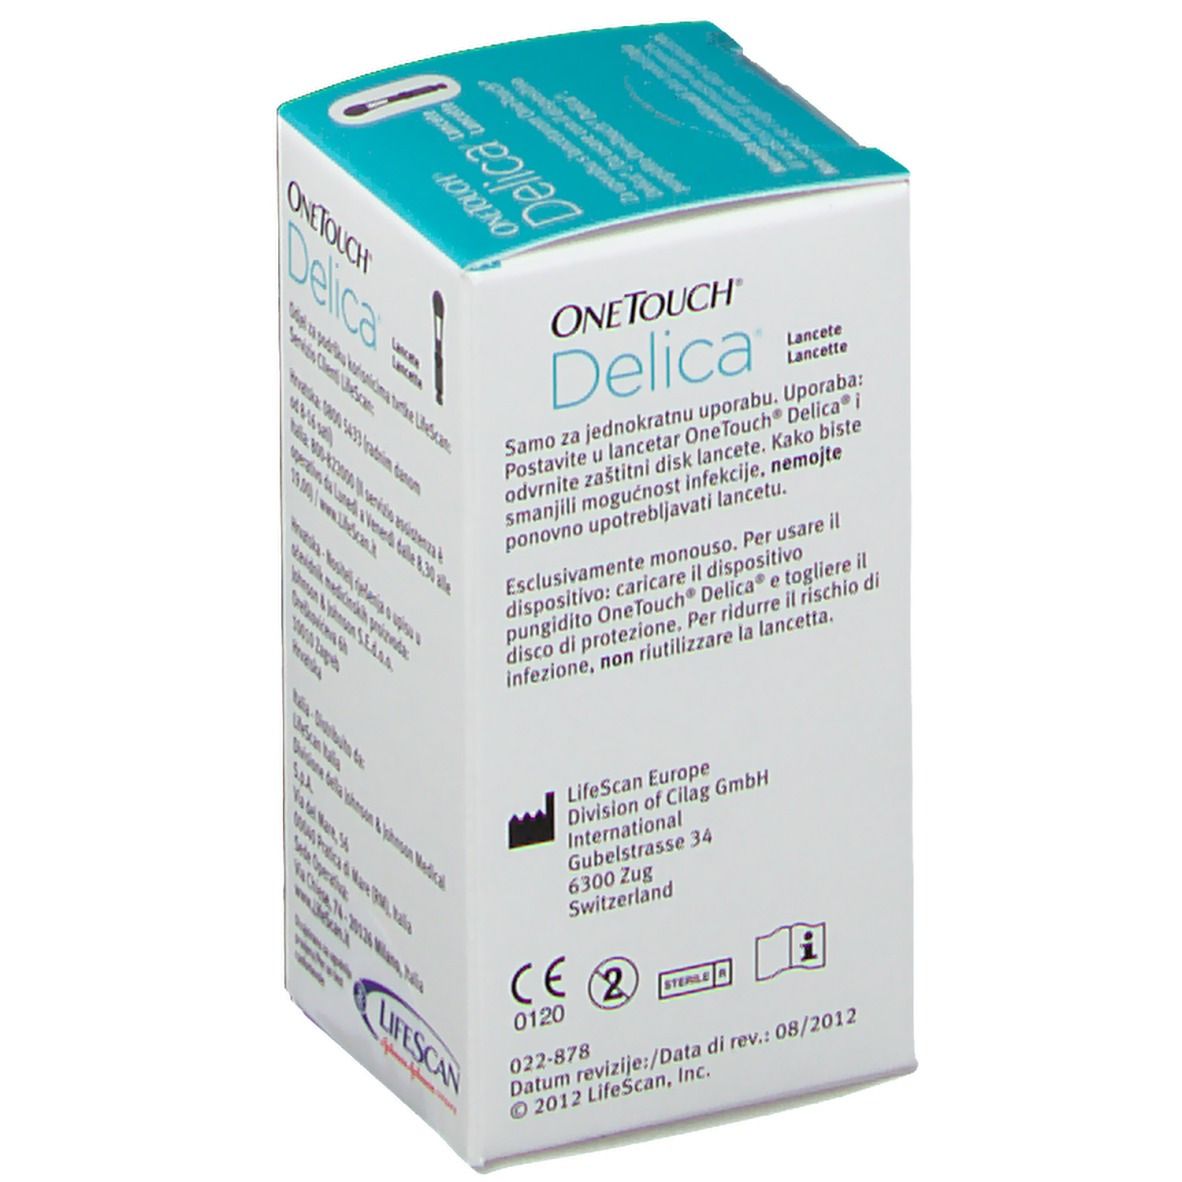 OneTouch® Delica Lancette Pungidito 30G